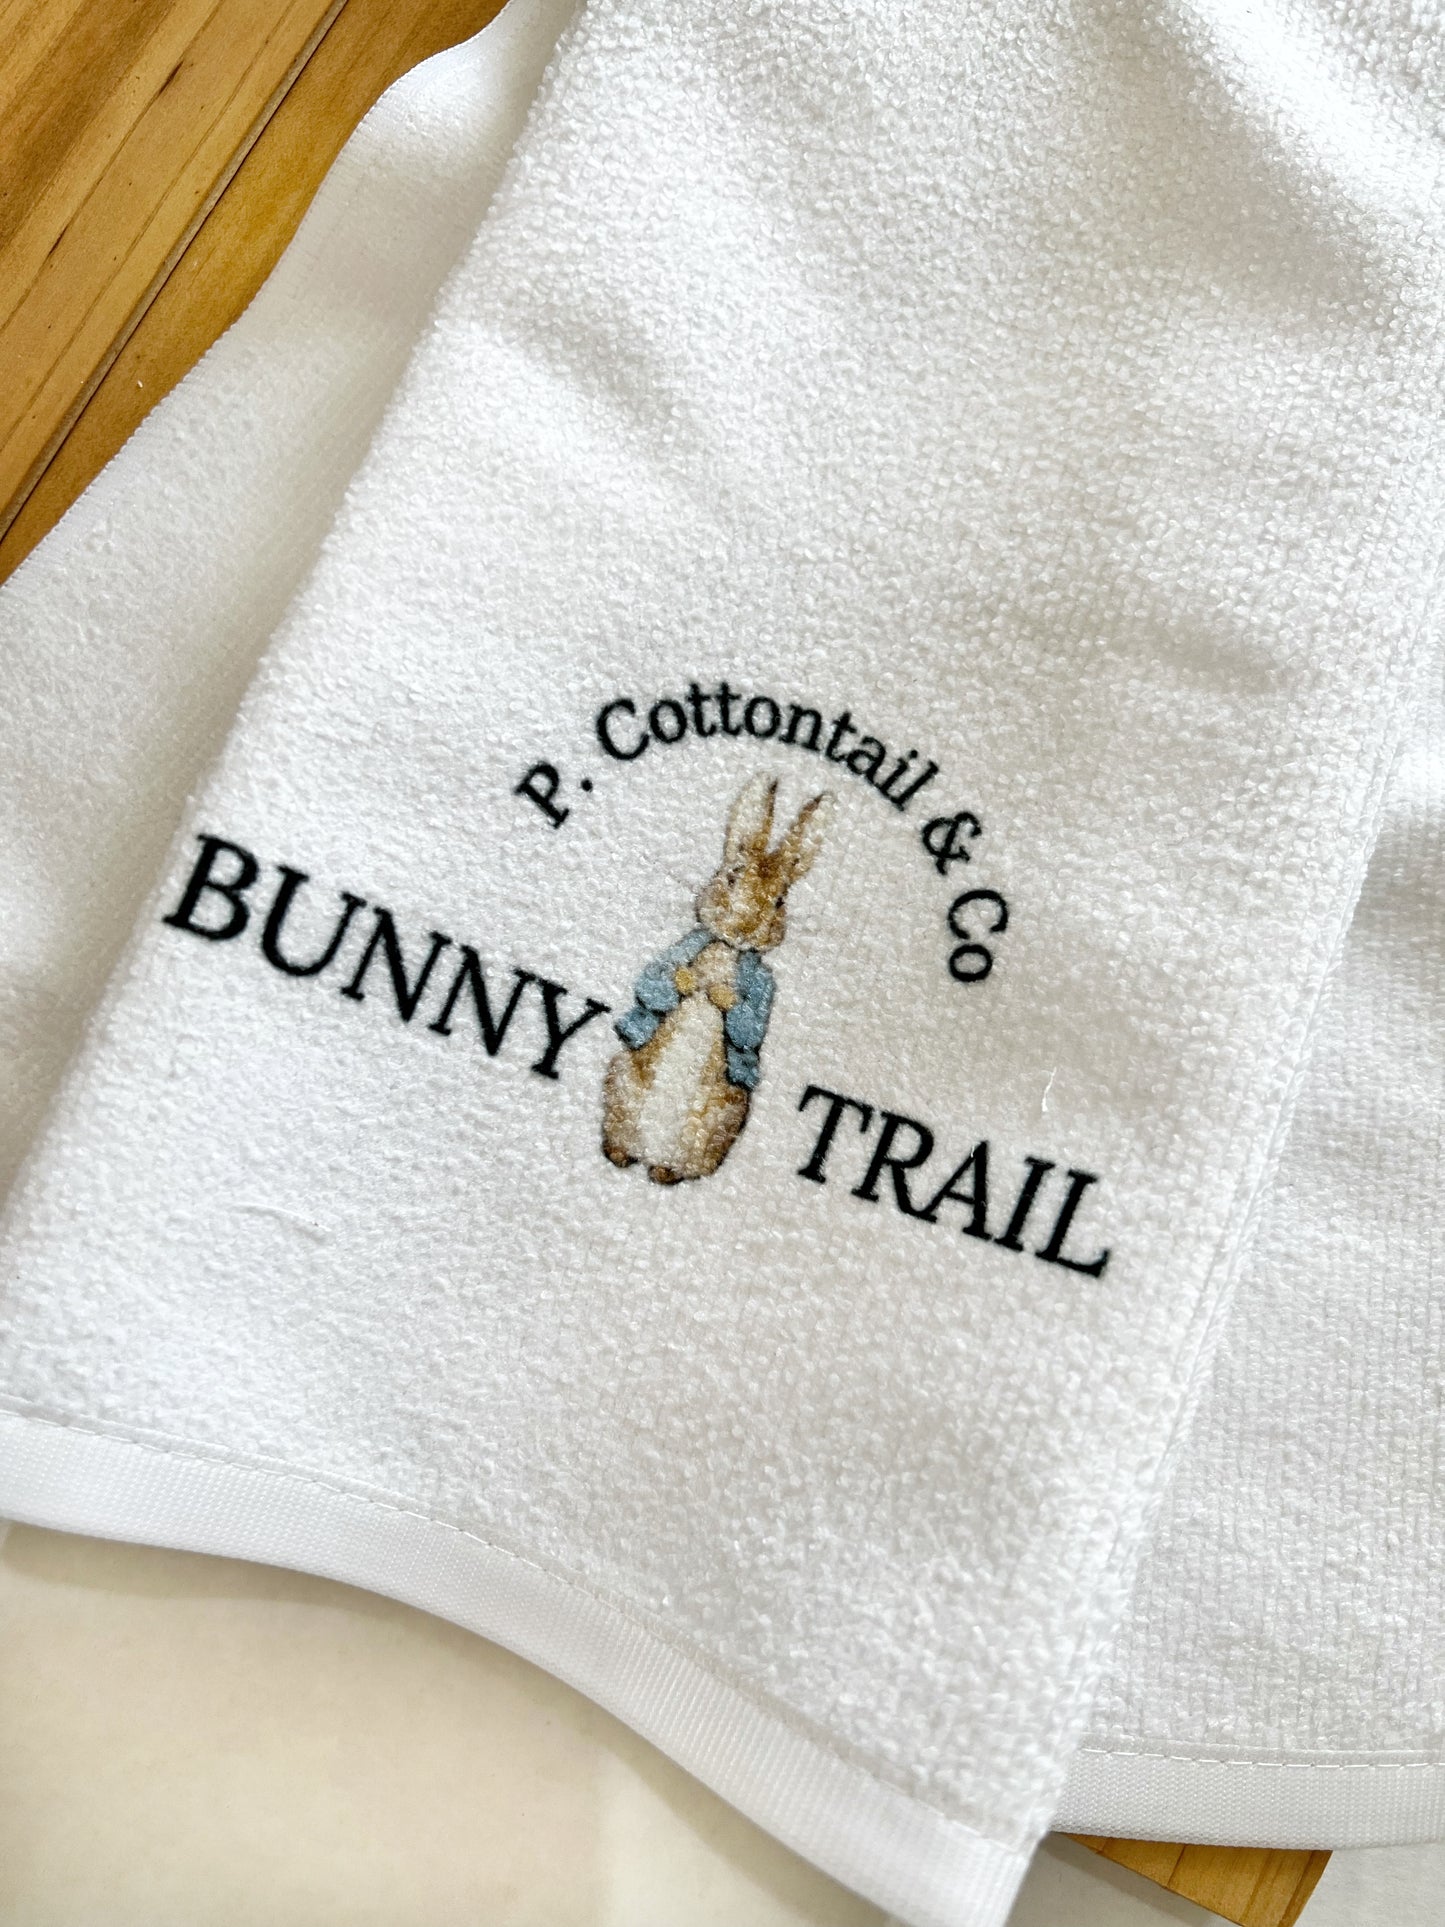 P Cottontail Bunny Trail Kitchen Towel